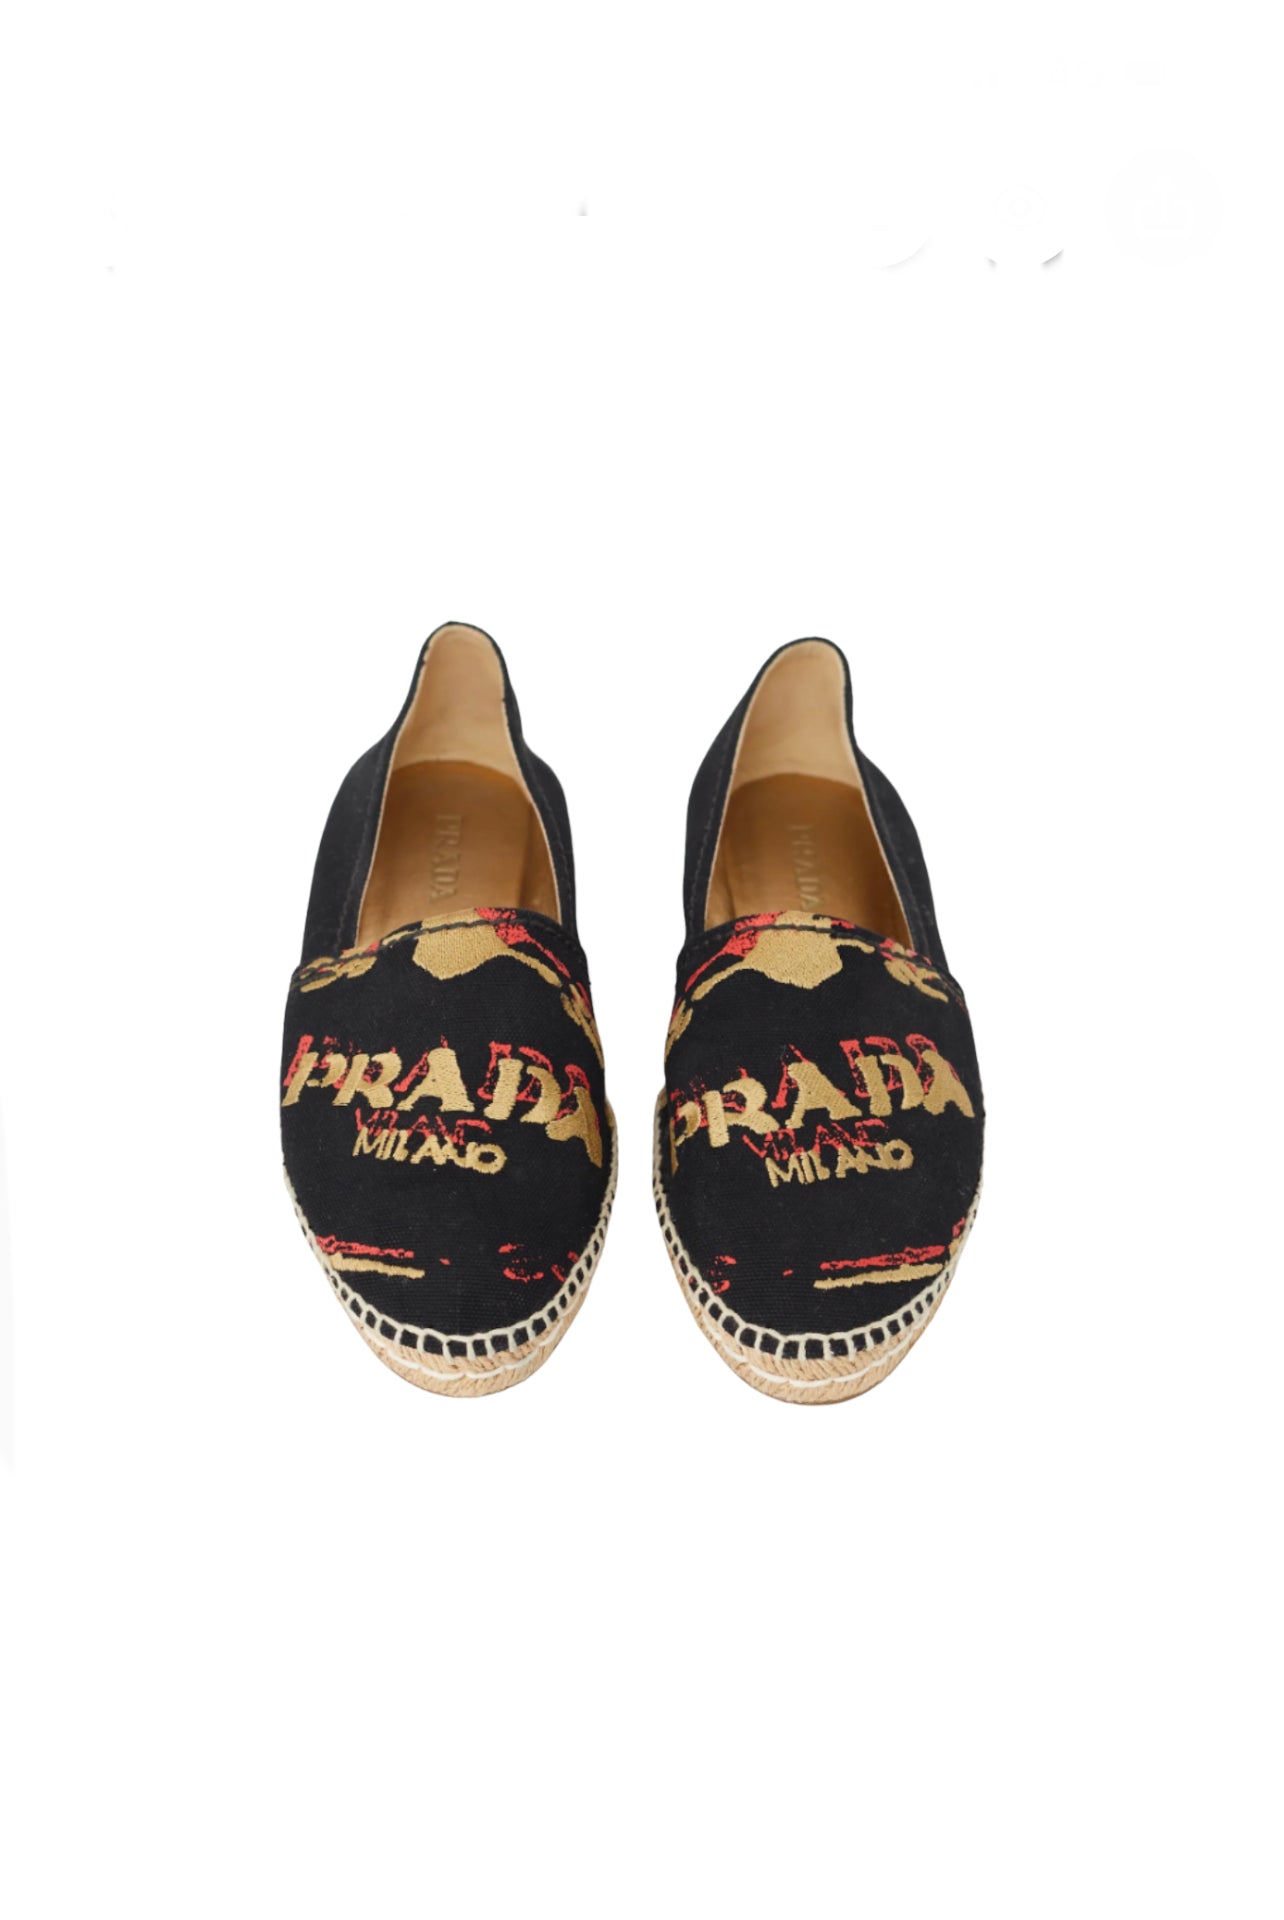 Load image into Gallery viewer, Prada Logo Espadrilles
